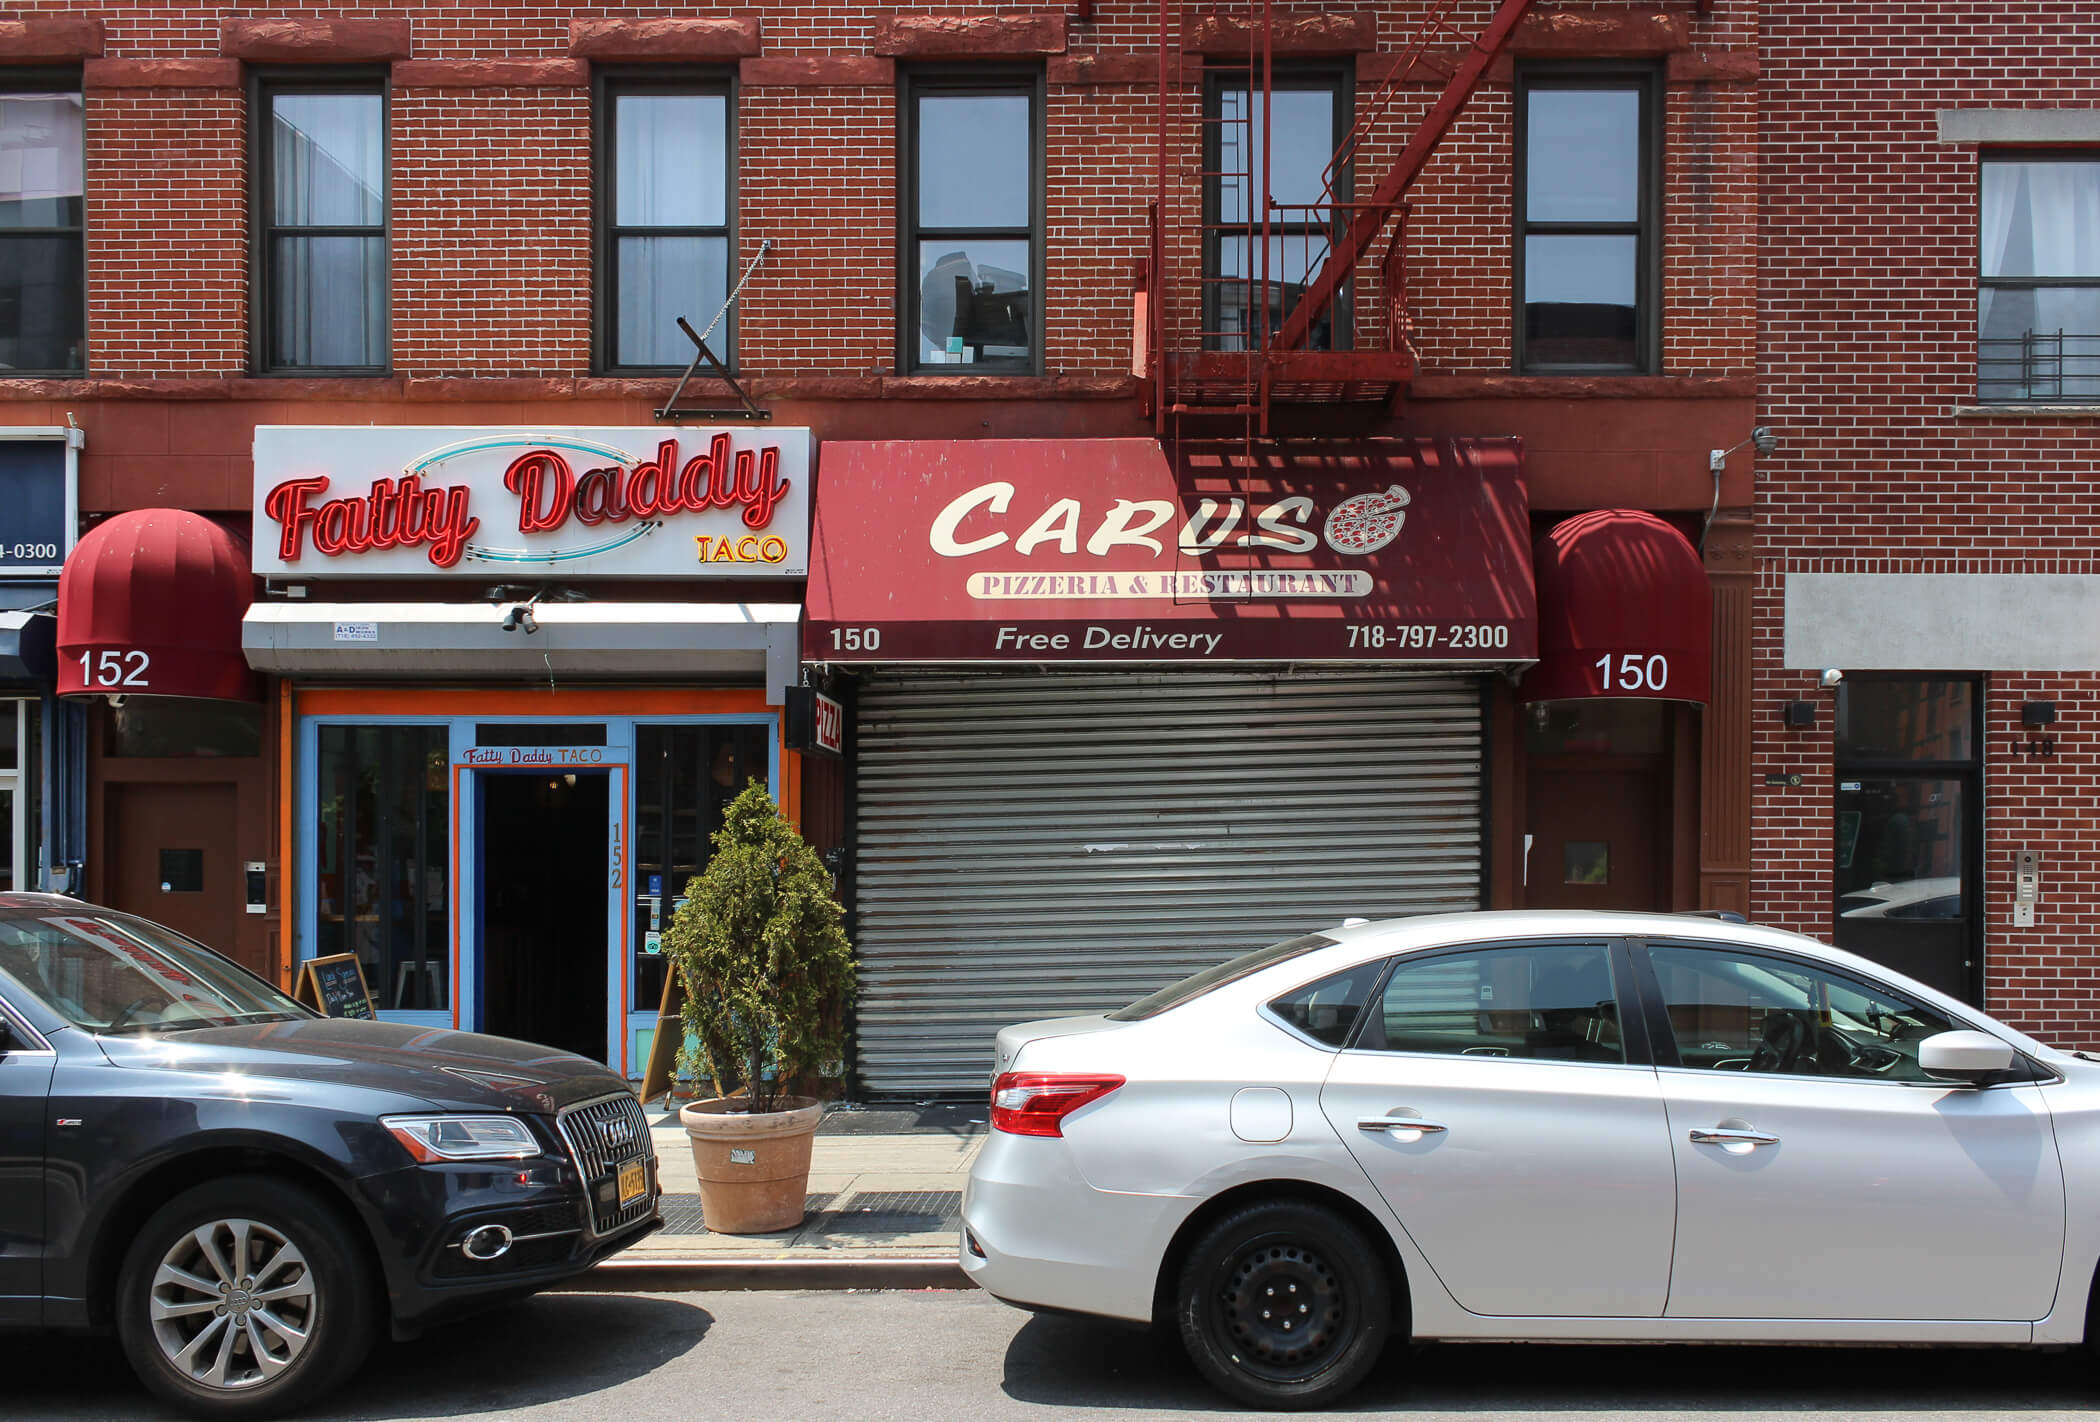 la rose pizza will take over the old caruso's storefront